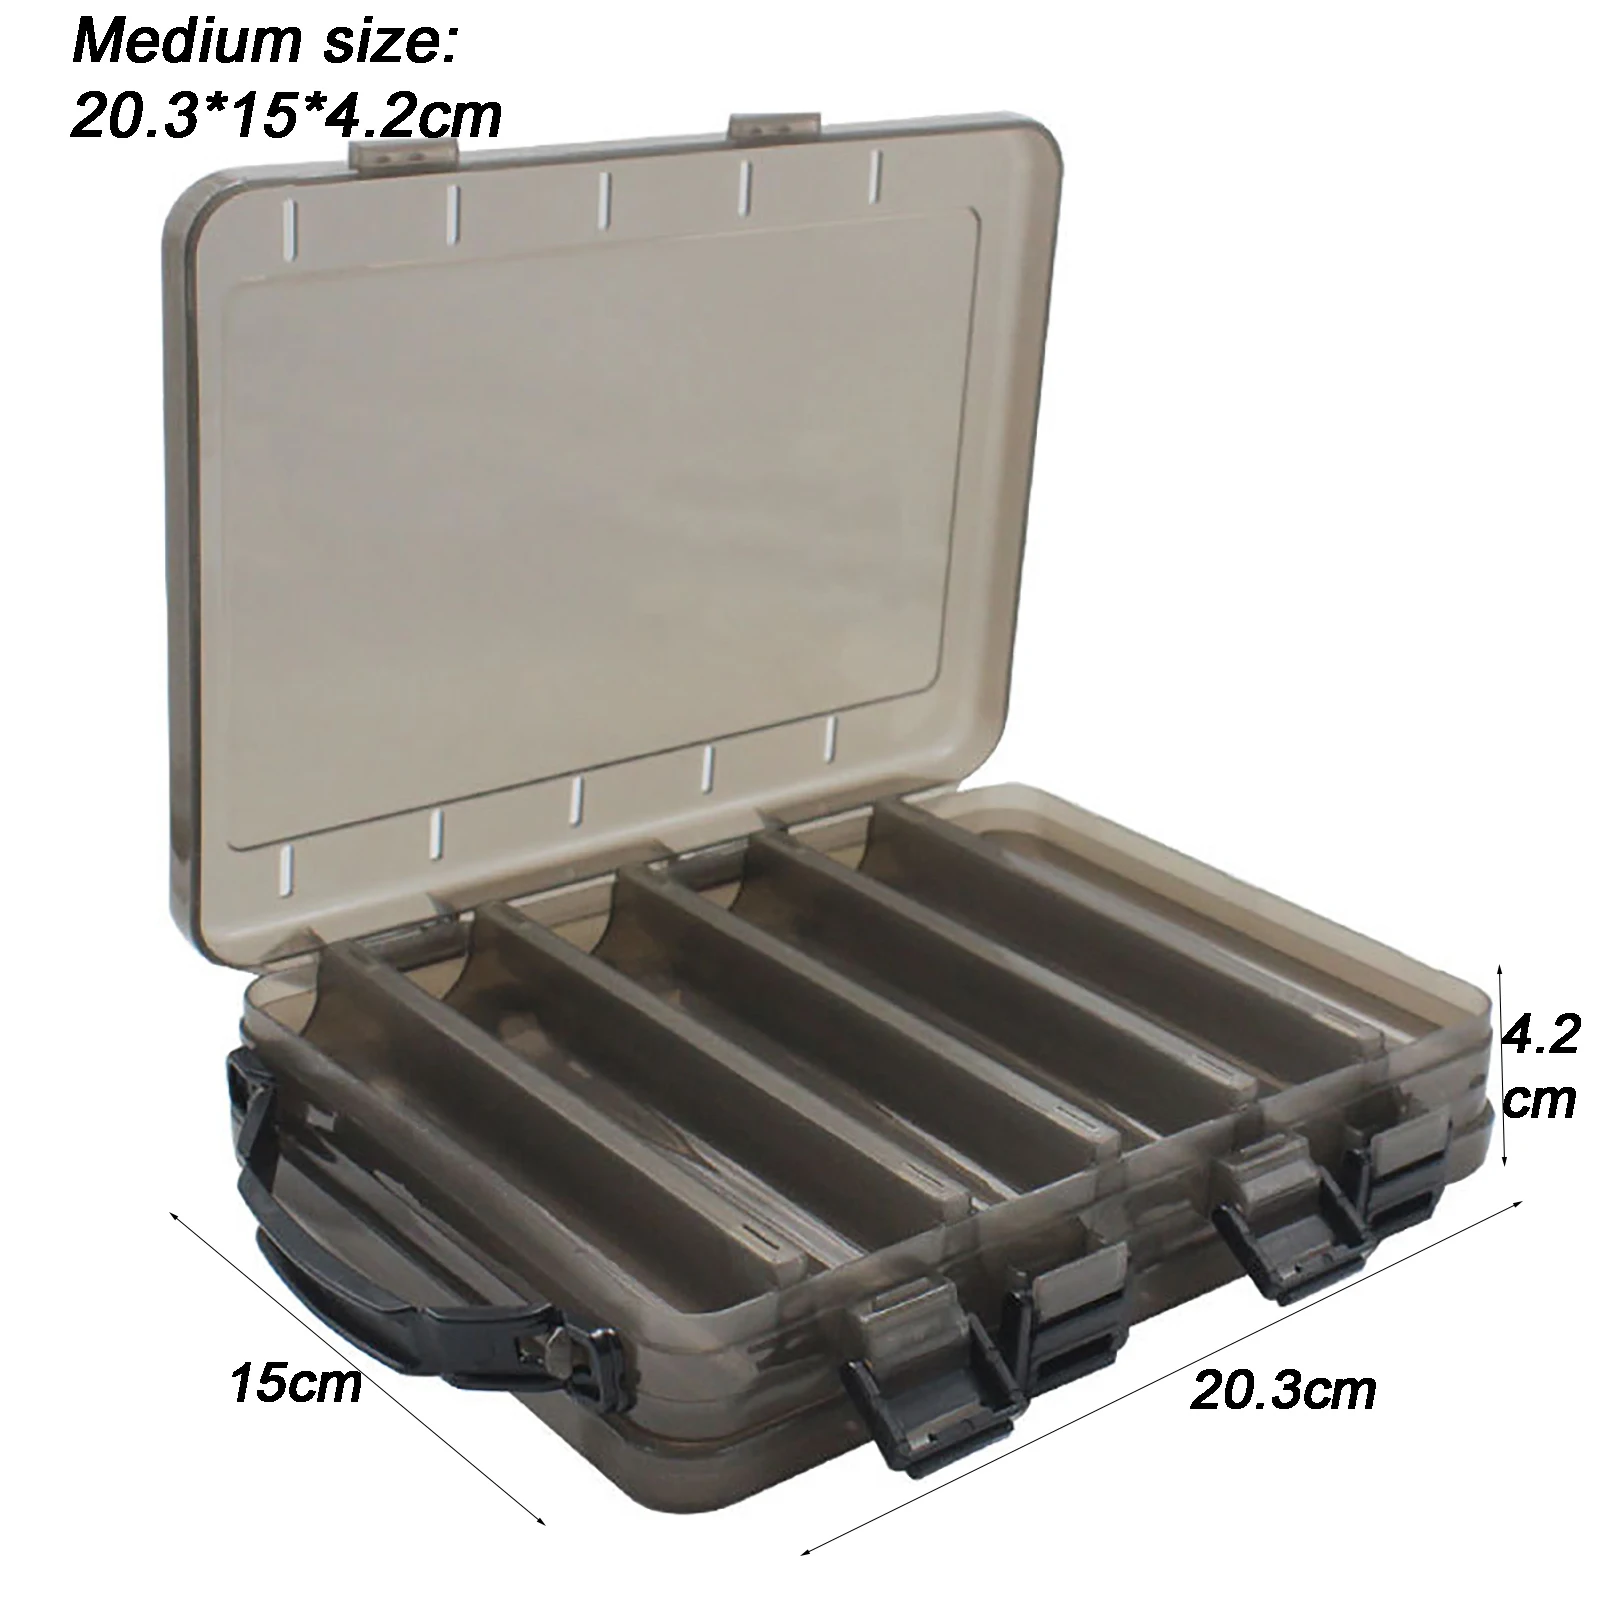 Slp Tools Boxlarge Fishing Tackle Box With Compartments